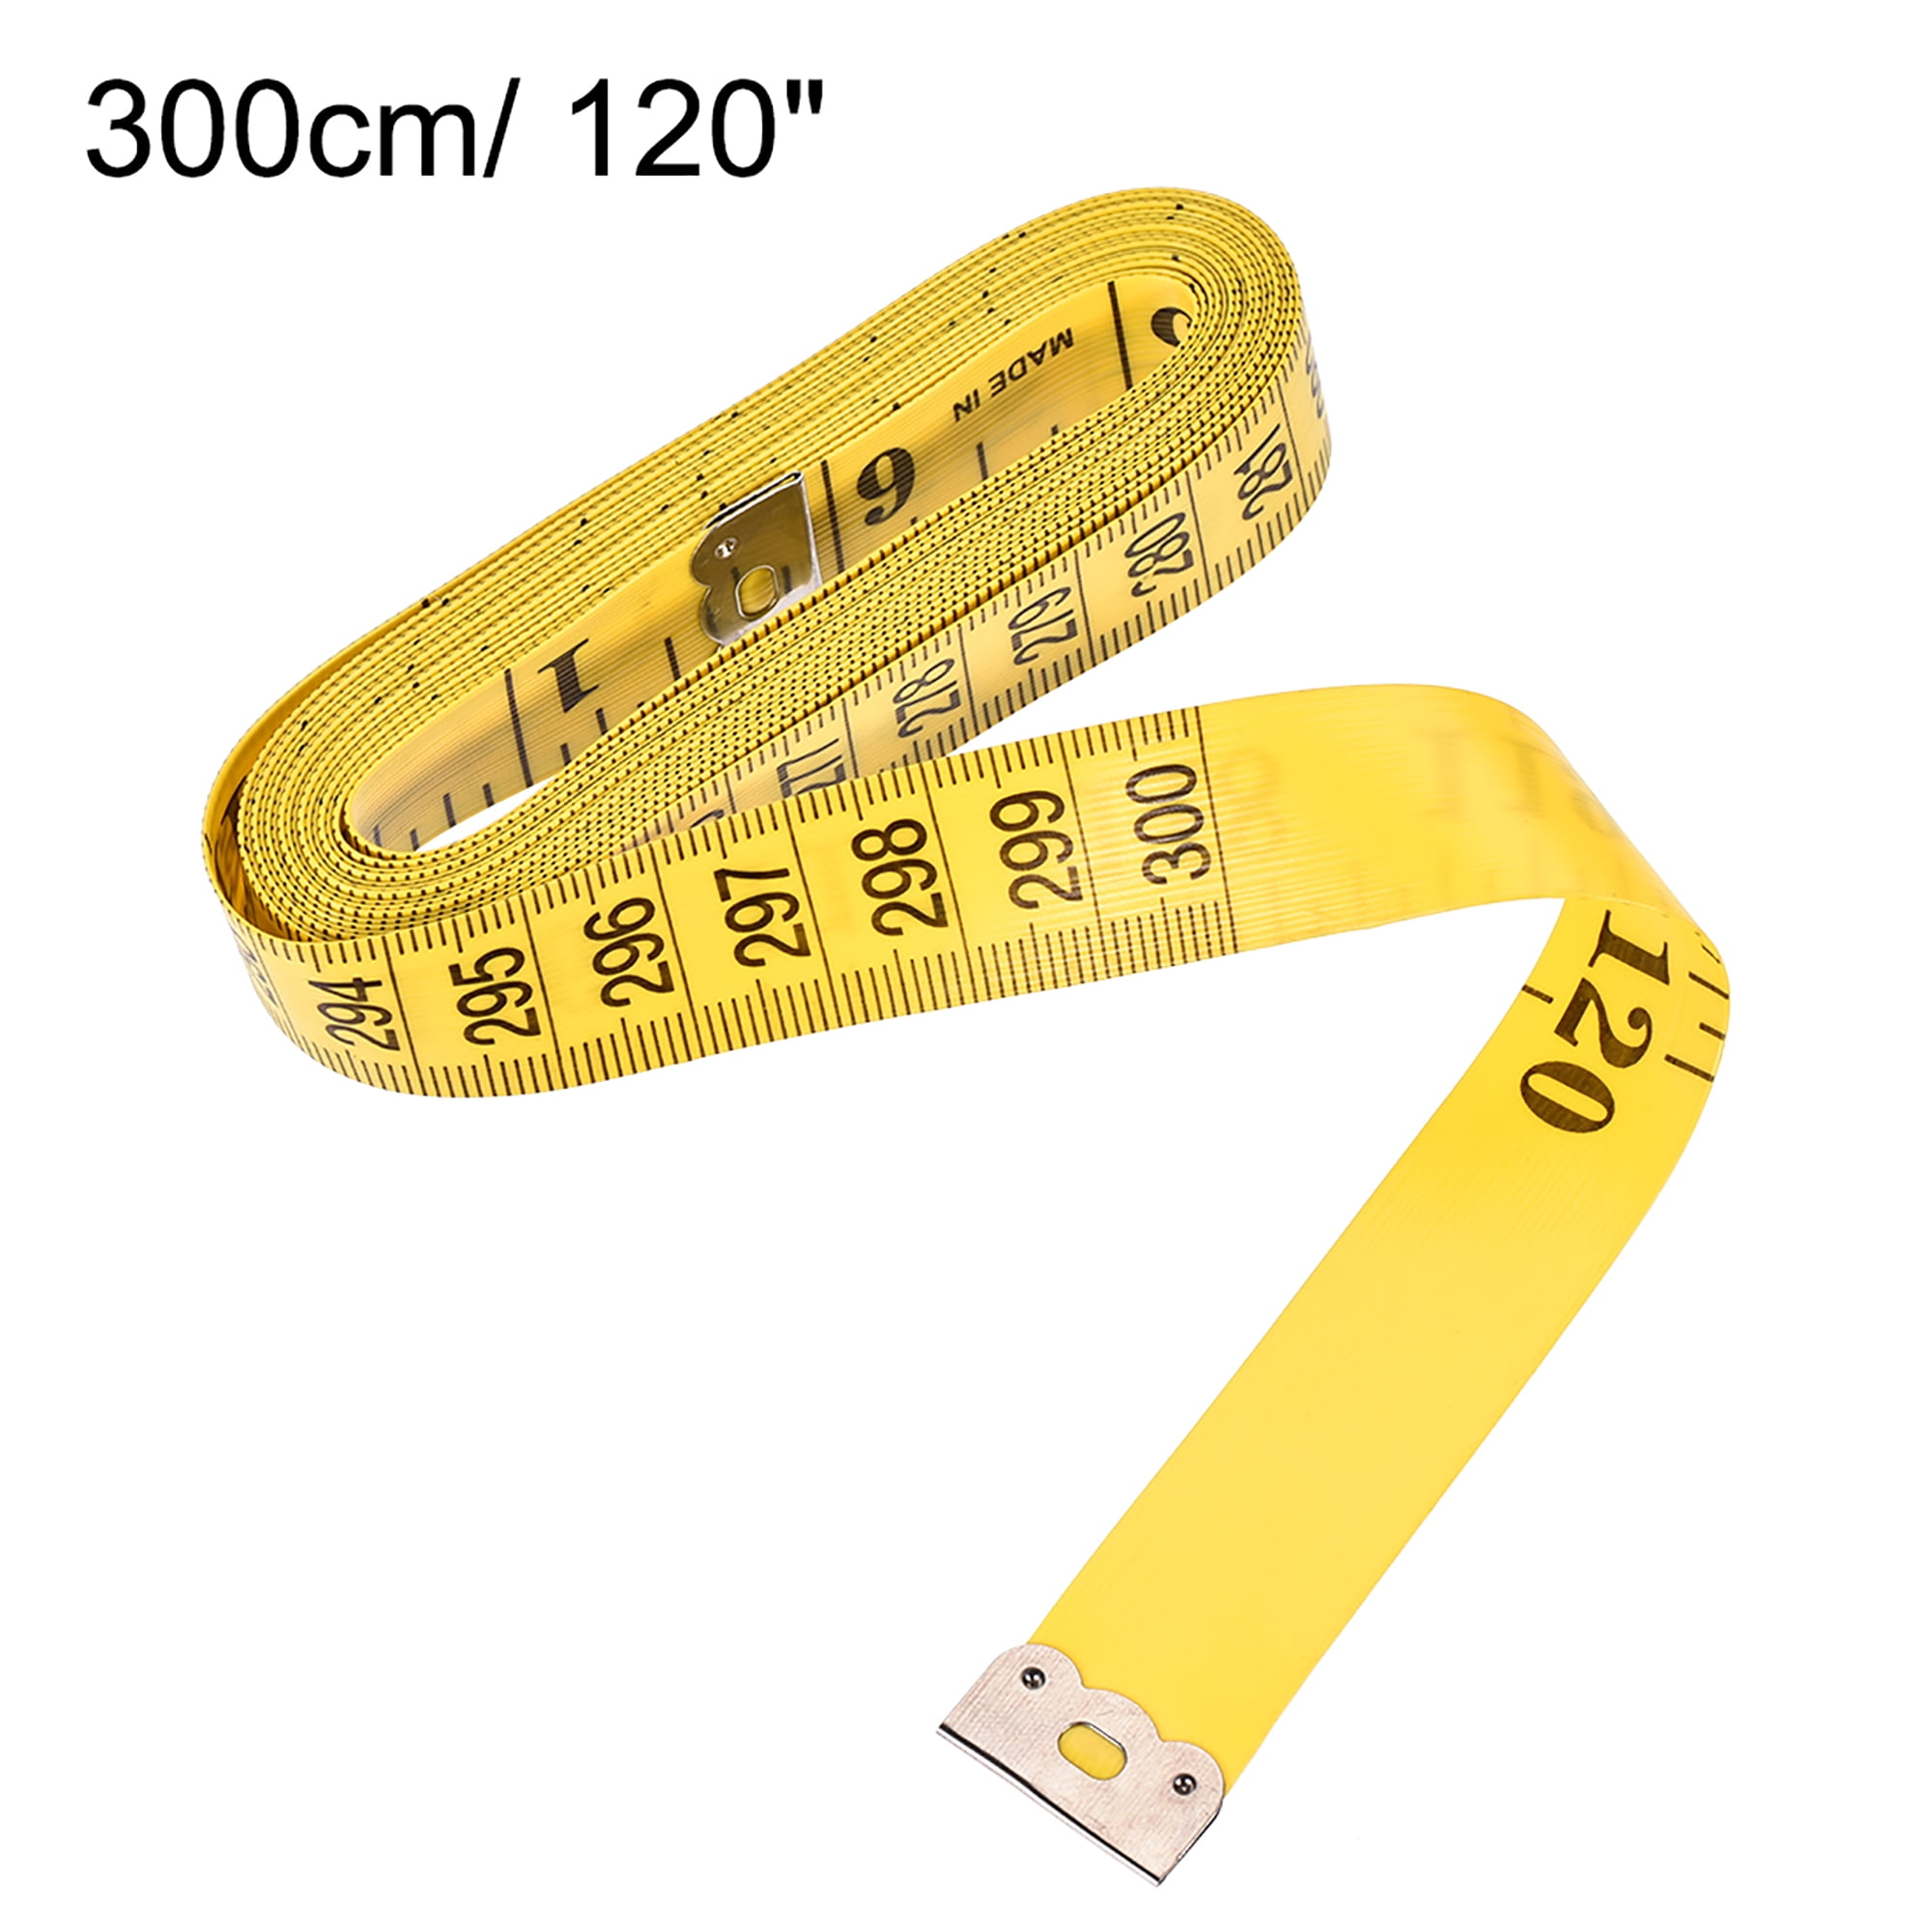 120300cm Sewing Tape Measure, Measuring Tape, Tape Measure